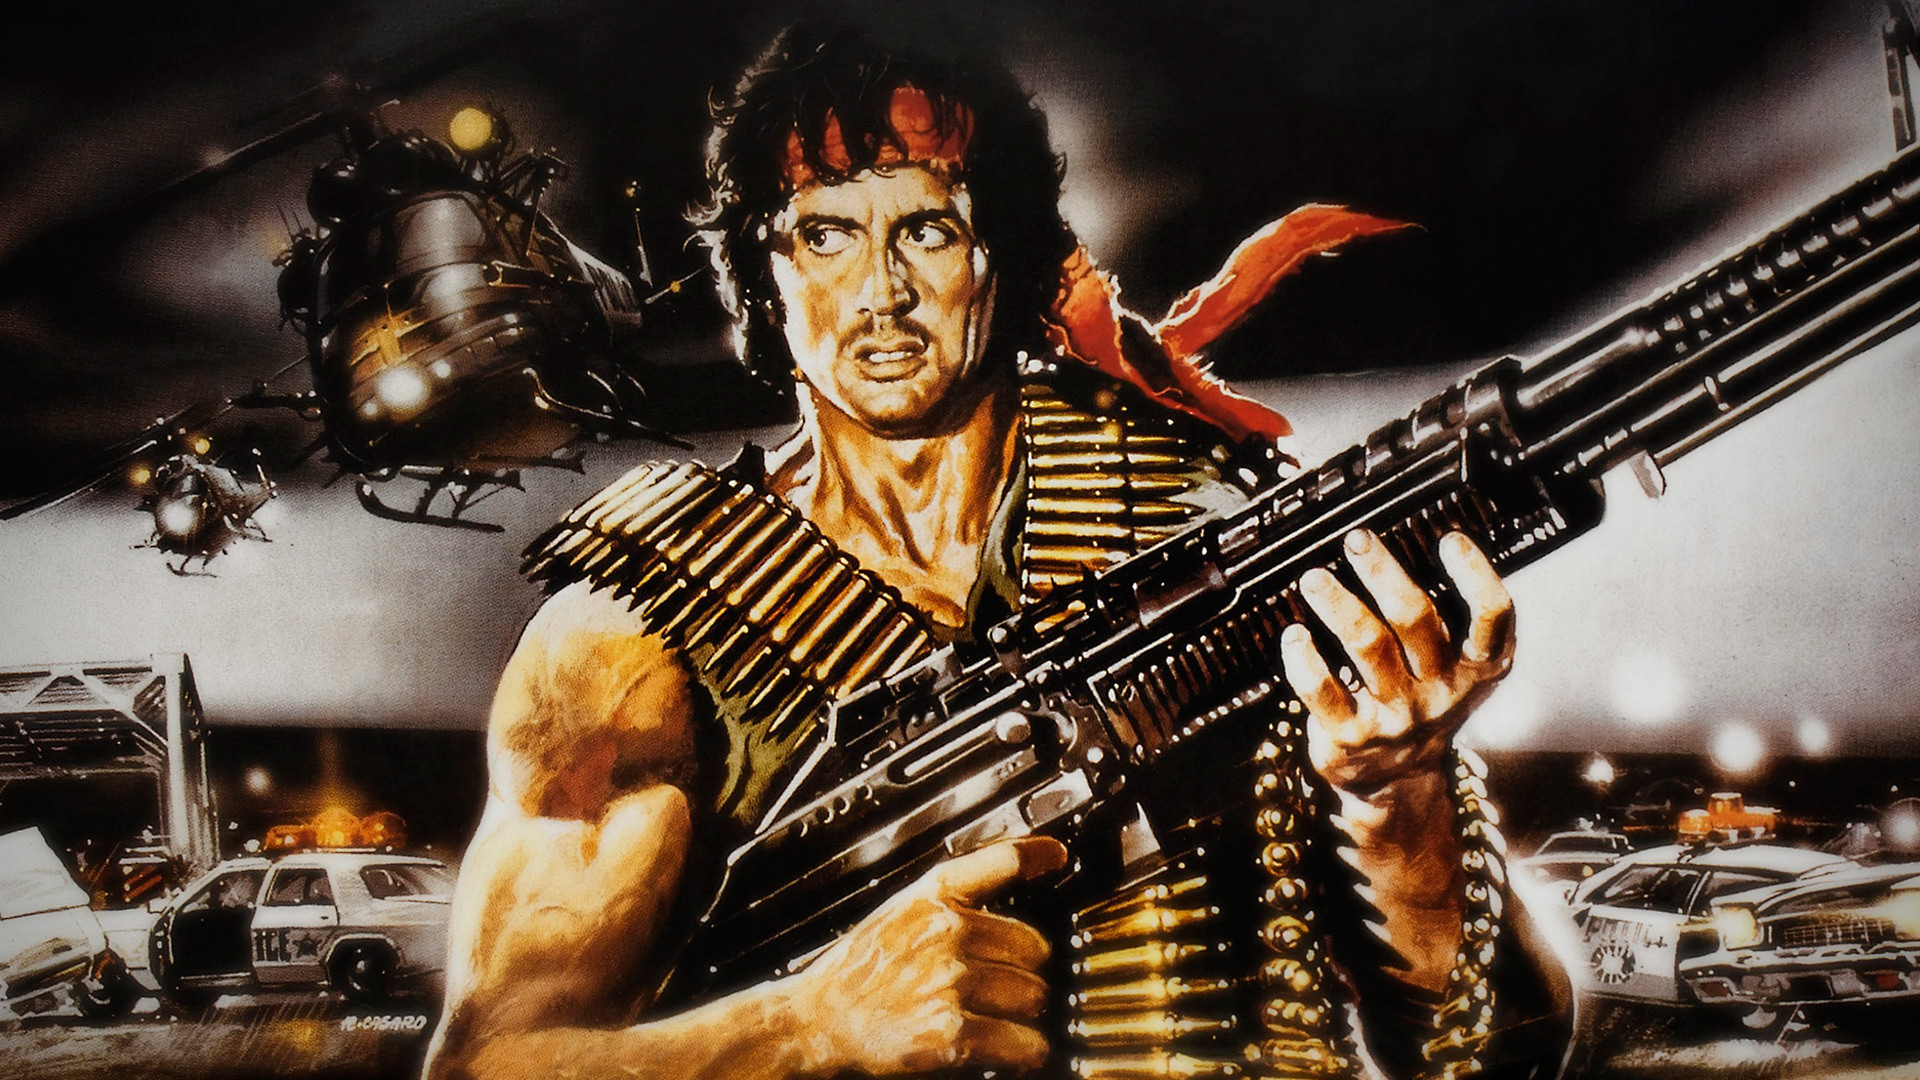 Sylvester Stallone Rambo Movies 052 2 wallpaper  2580x2301  1024717   WallpaperUP